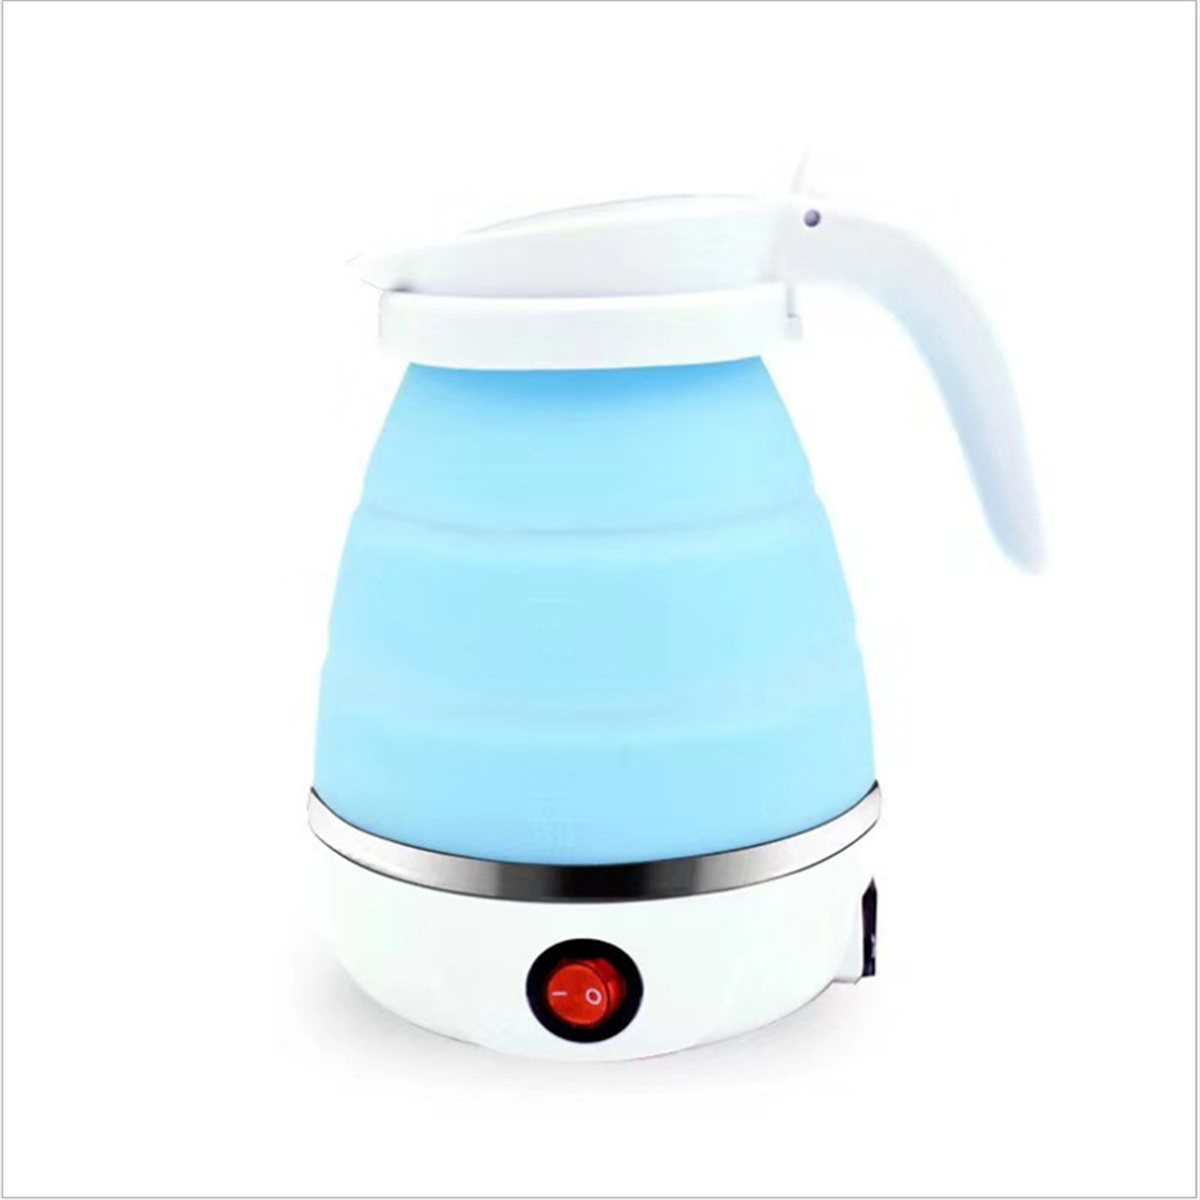 FEI Elektrischer Wasserkocher 304 Edelstahl Blau Zusammenklappbarer Wasserkocher Wasserkocher, Blau Mini-Wasserkocher